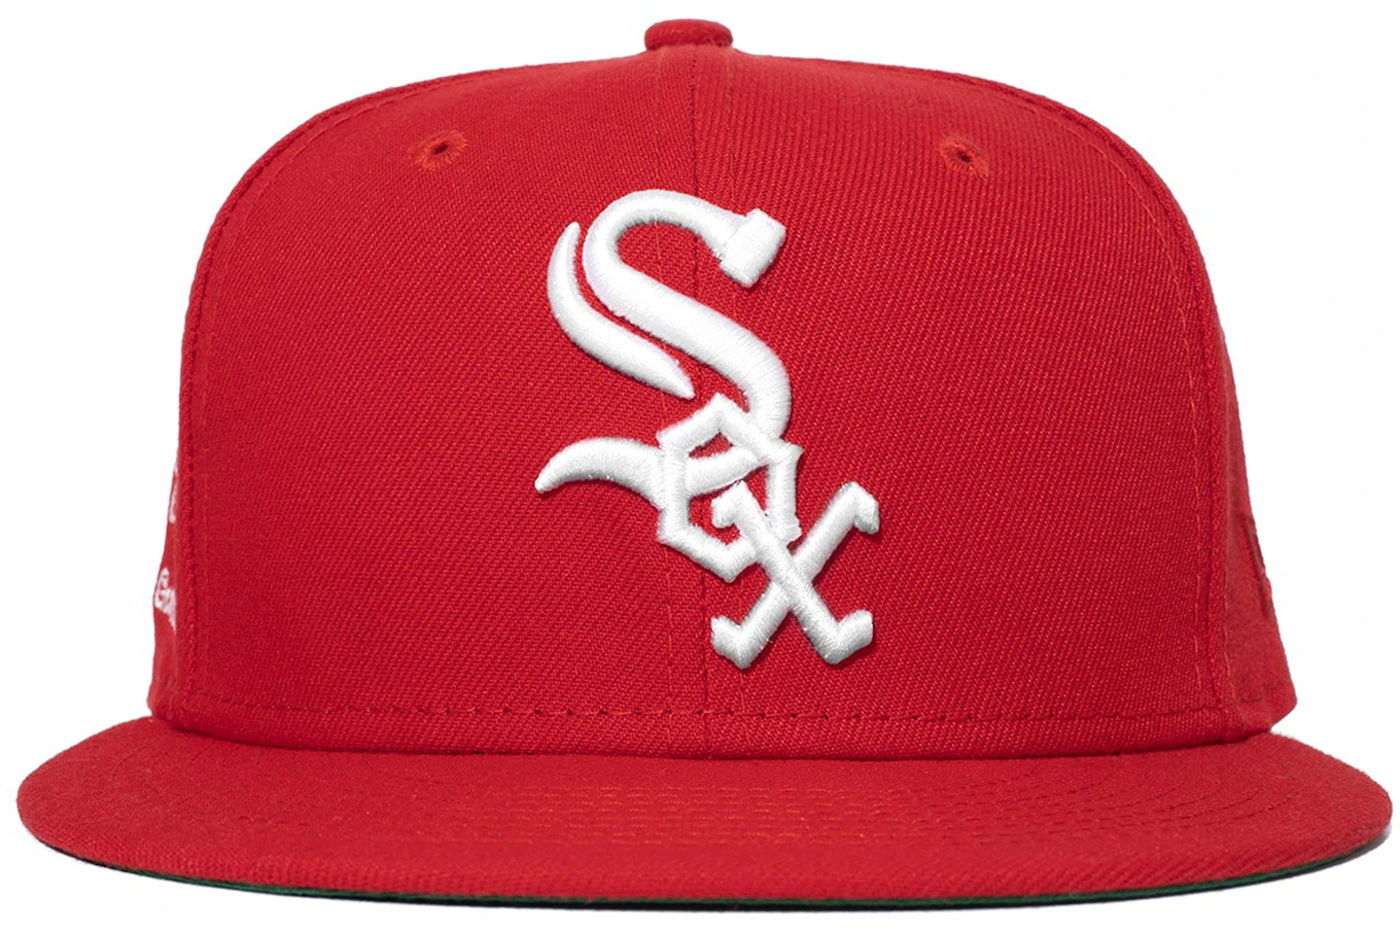 Joe Freshgoods Chicago White Sox By JFG Hat Red - FW22 - US